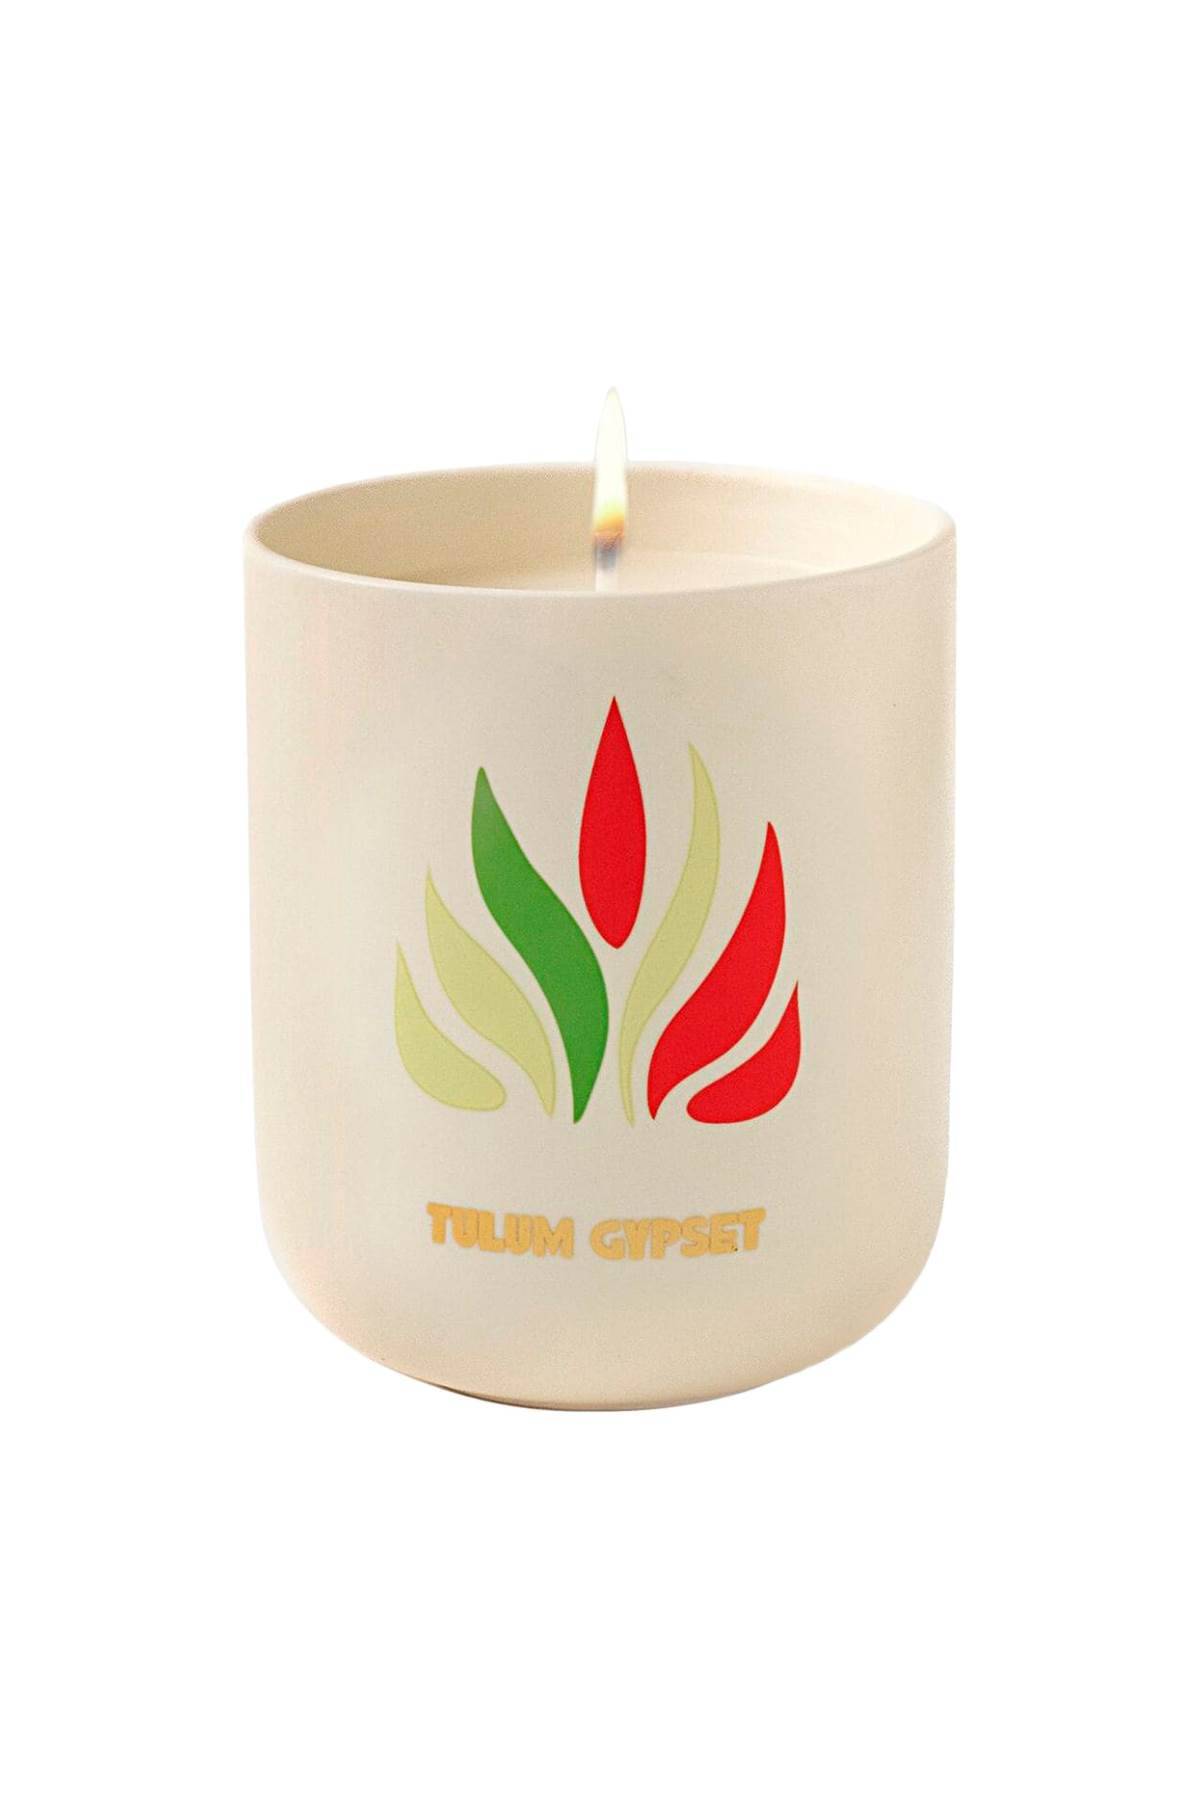 Assouline ASSOULINE tulum gypset scented candle